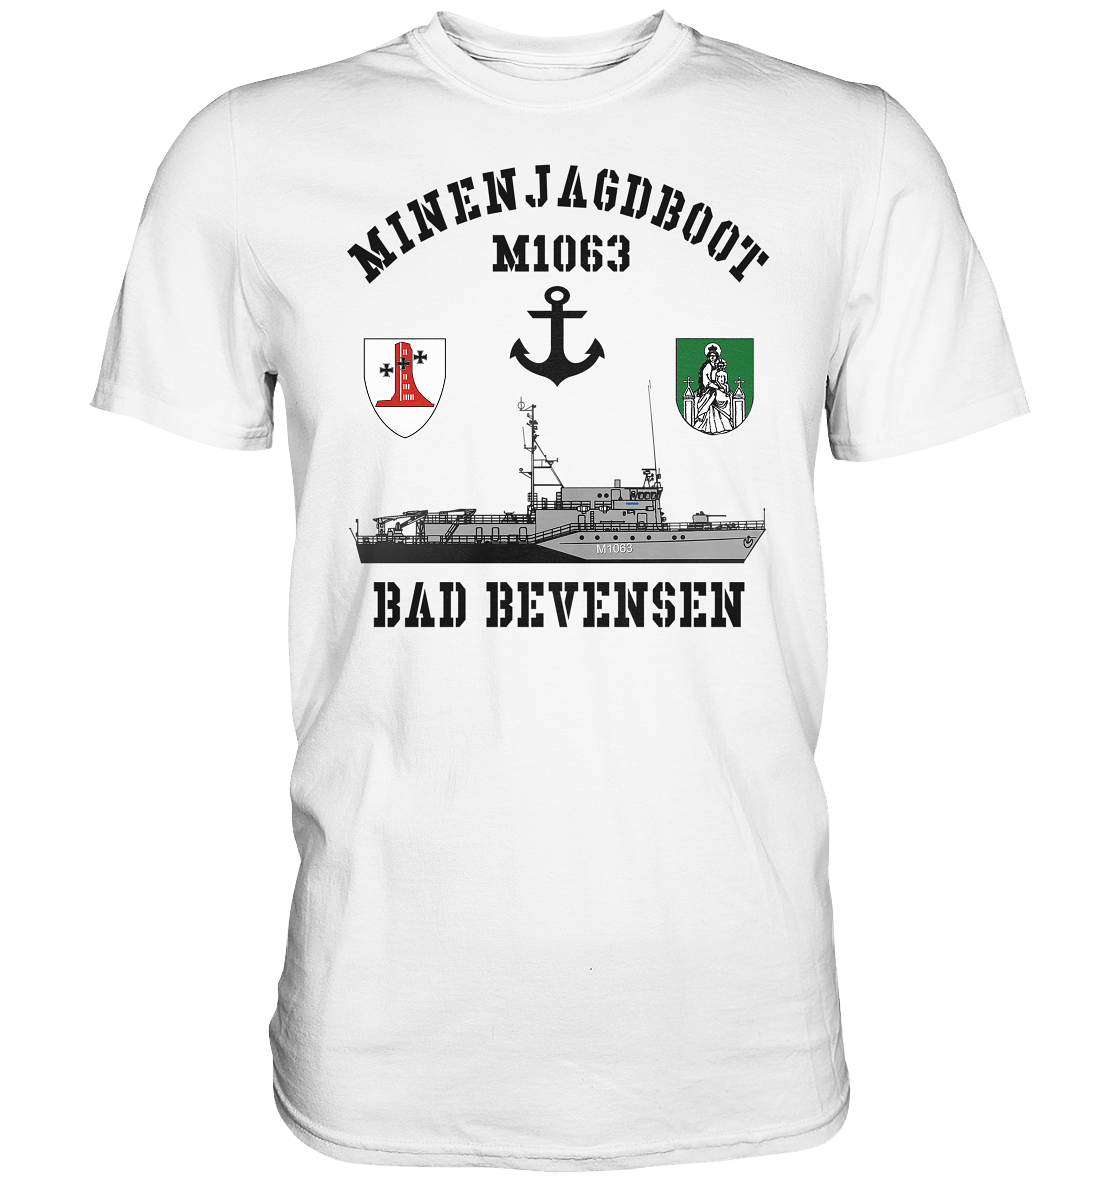 Mij.-Boot M1063 BAD BEVENSEN Anker 1.MSG - Premium Shirt